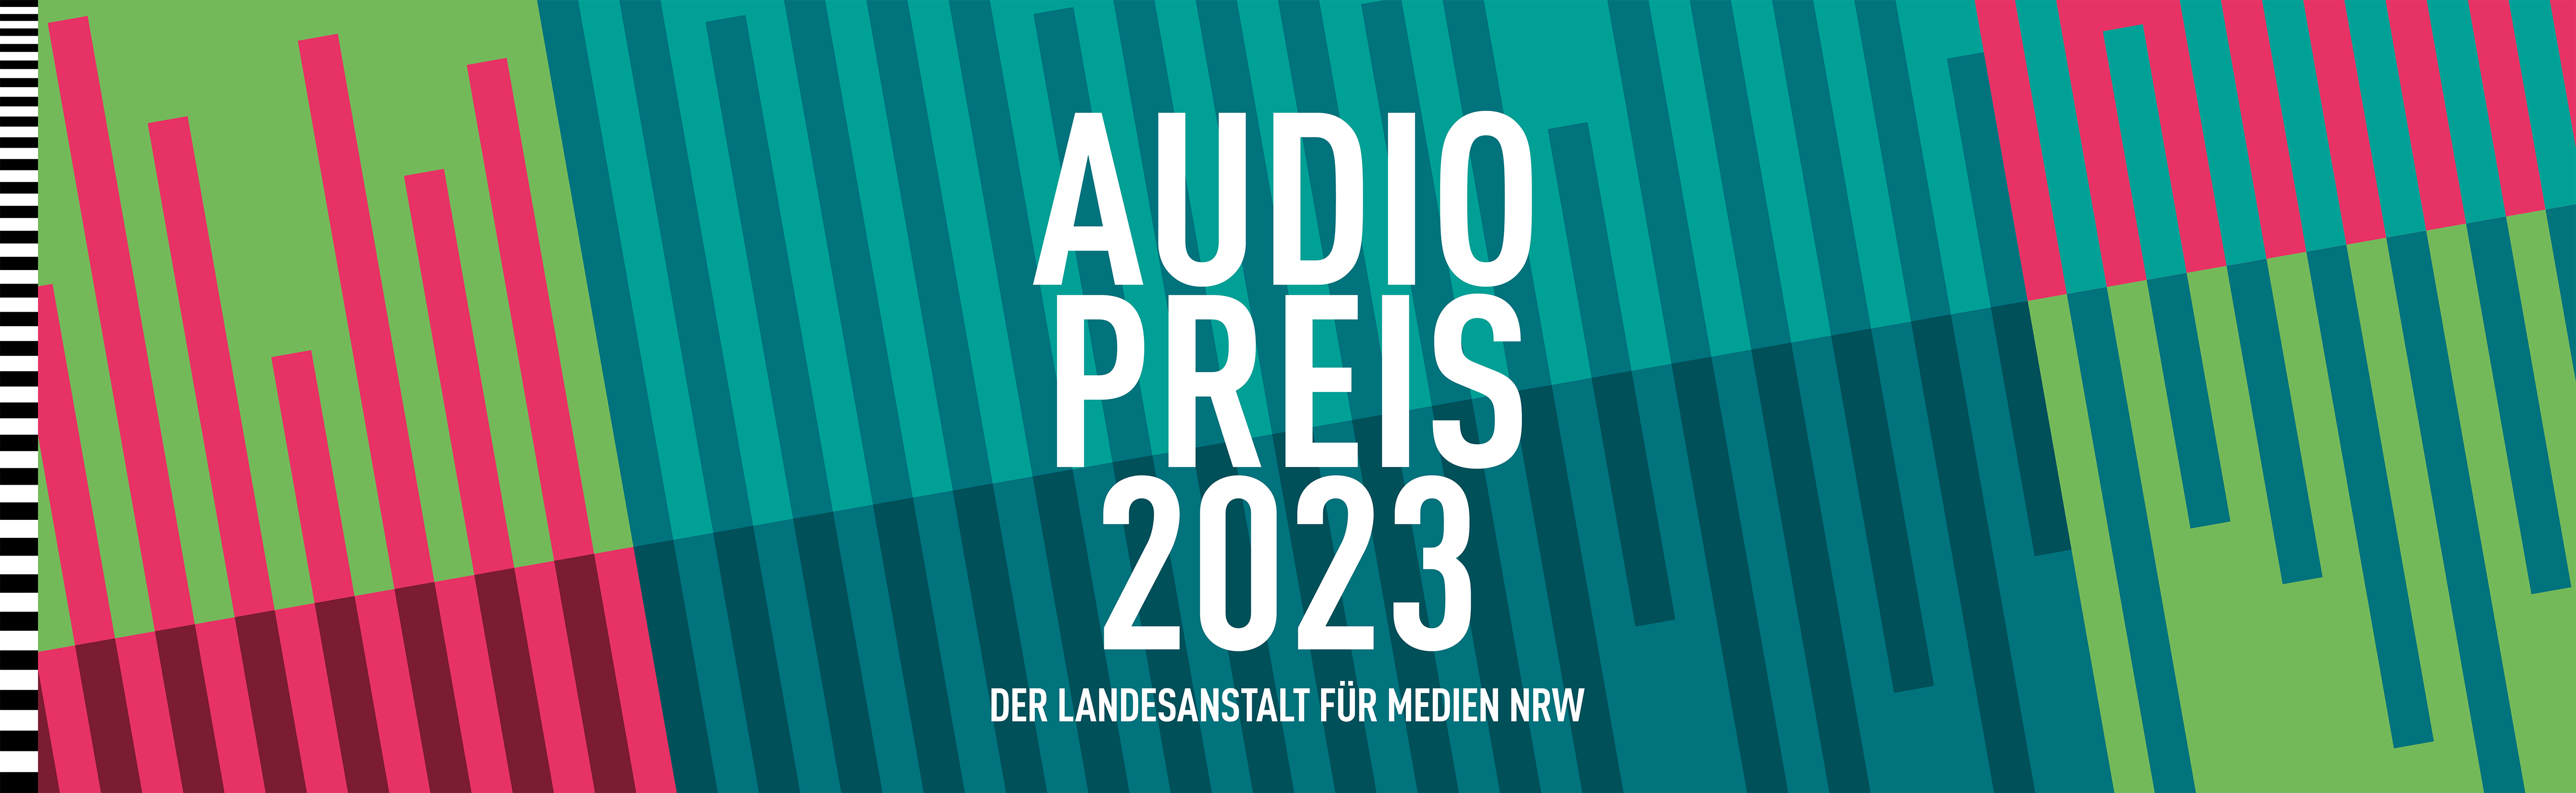 Audiopreis 2023